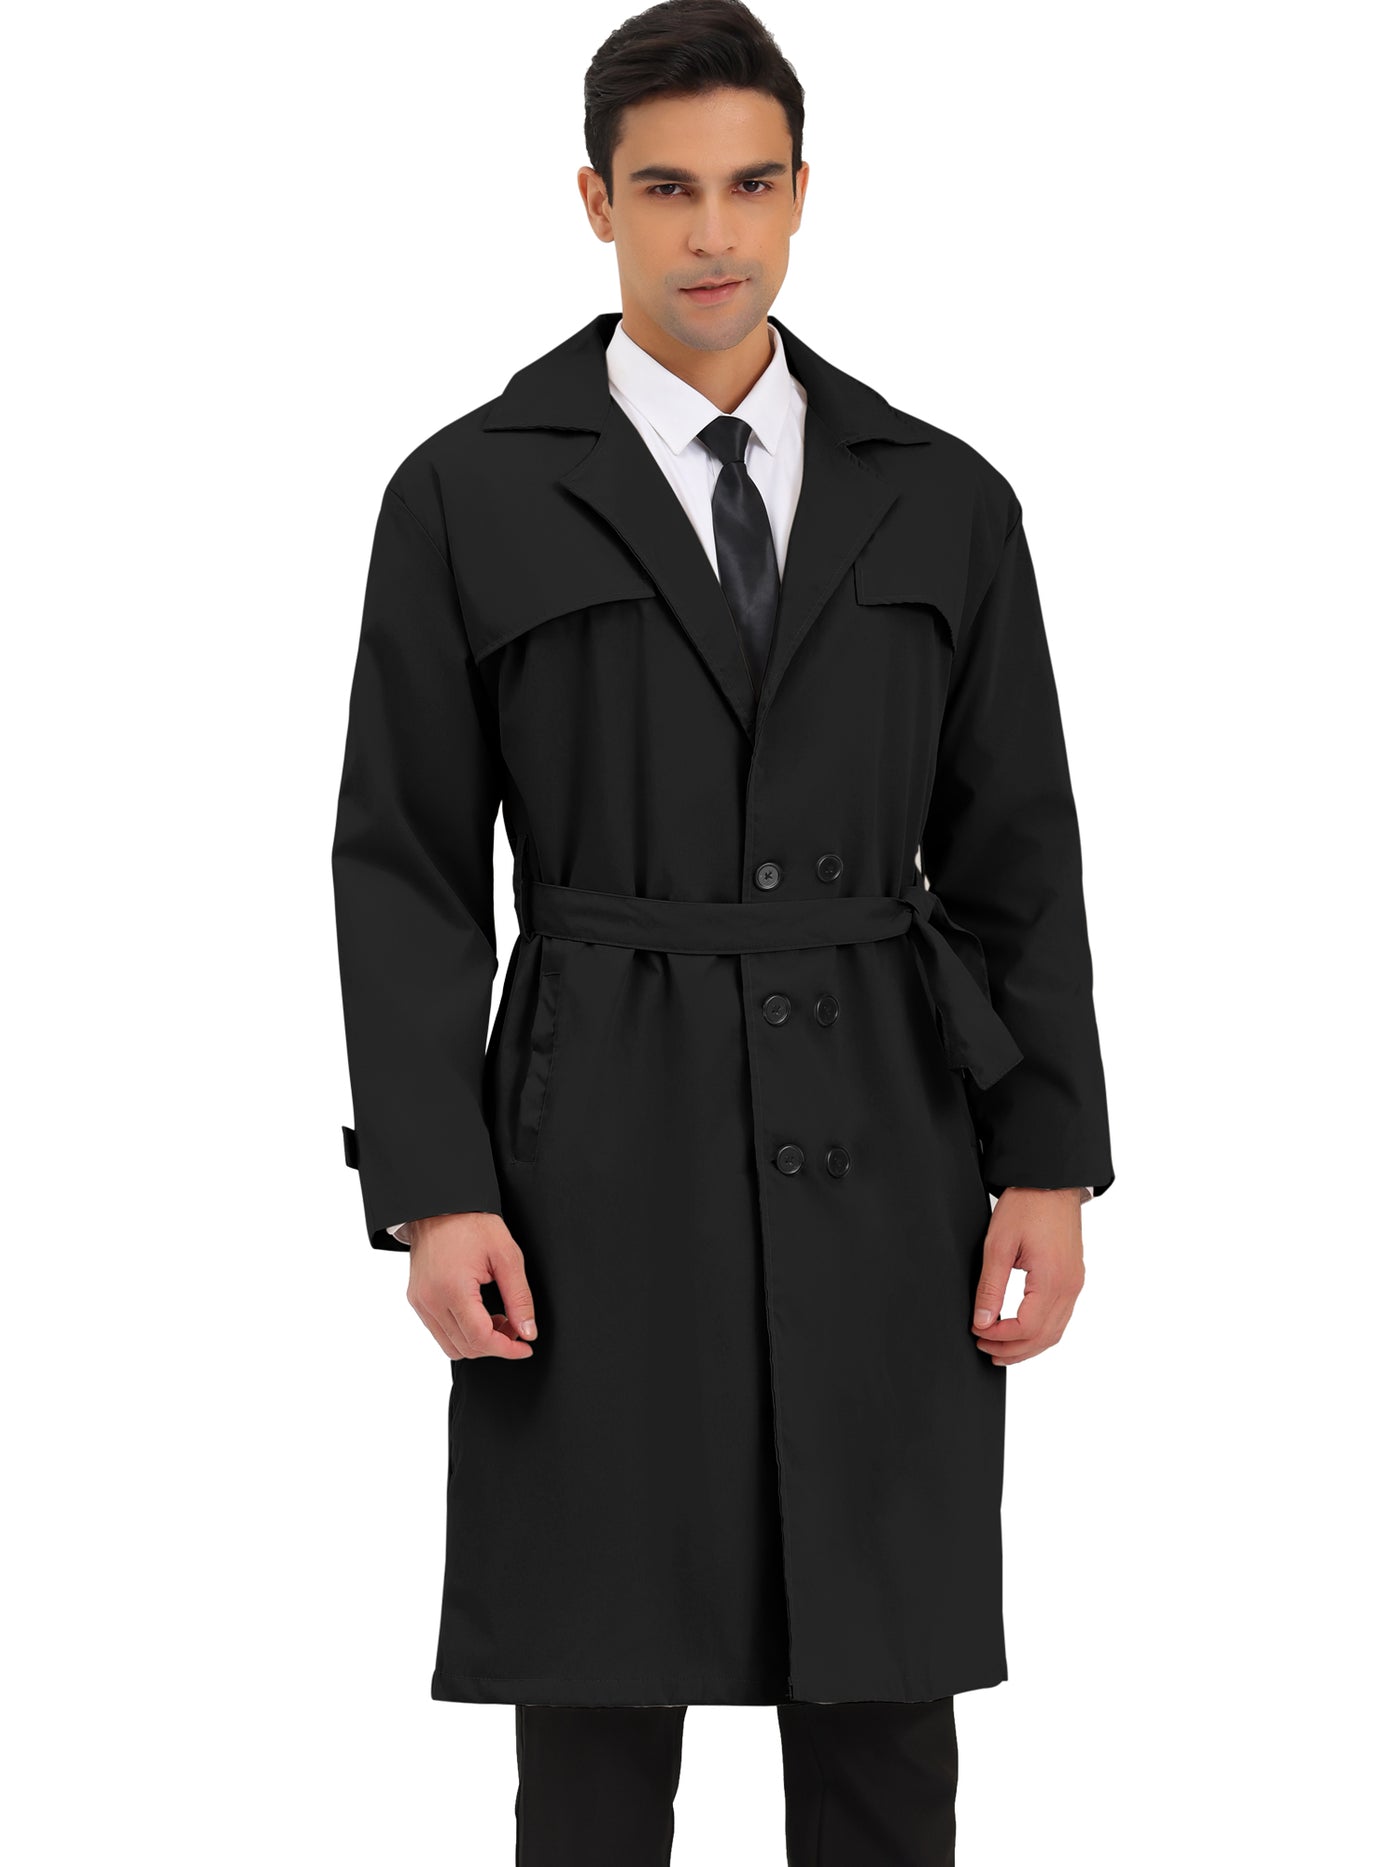 Bublédon Men's Trench Coat Double Breasted Lightweight Belted Long Windbreaker Jacket Overcoat